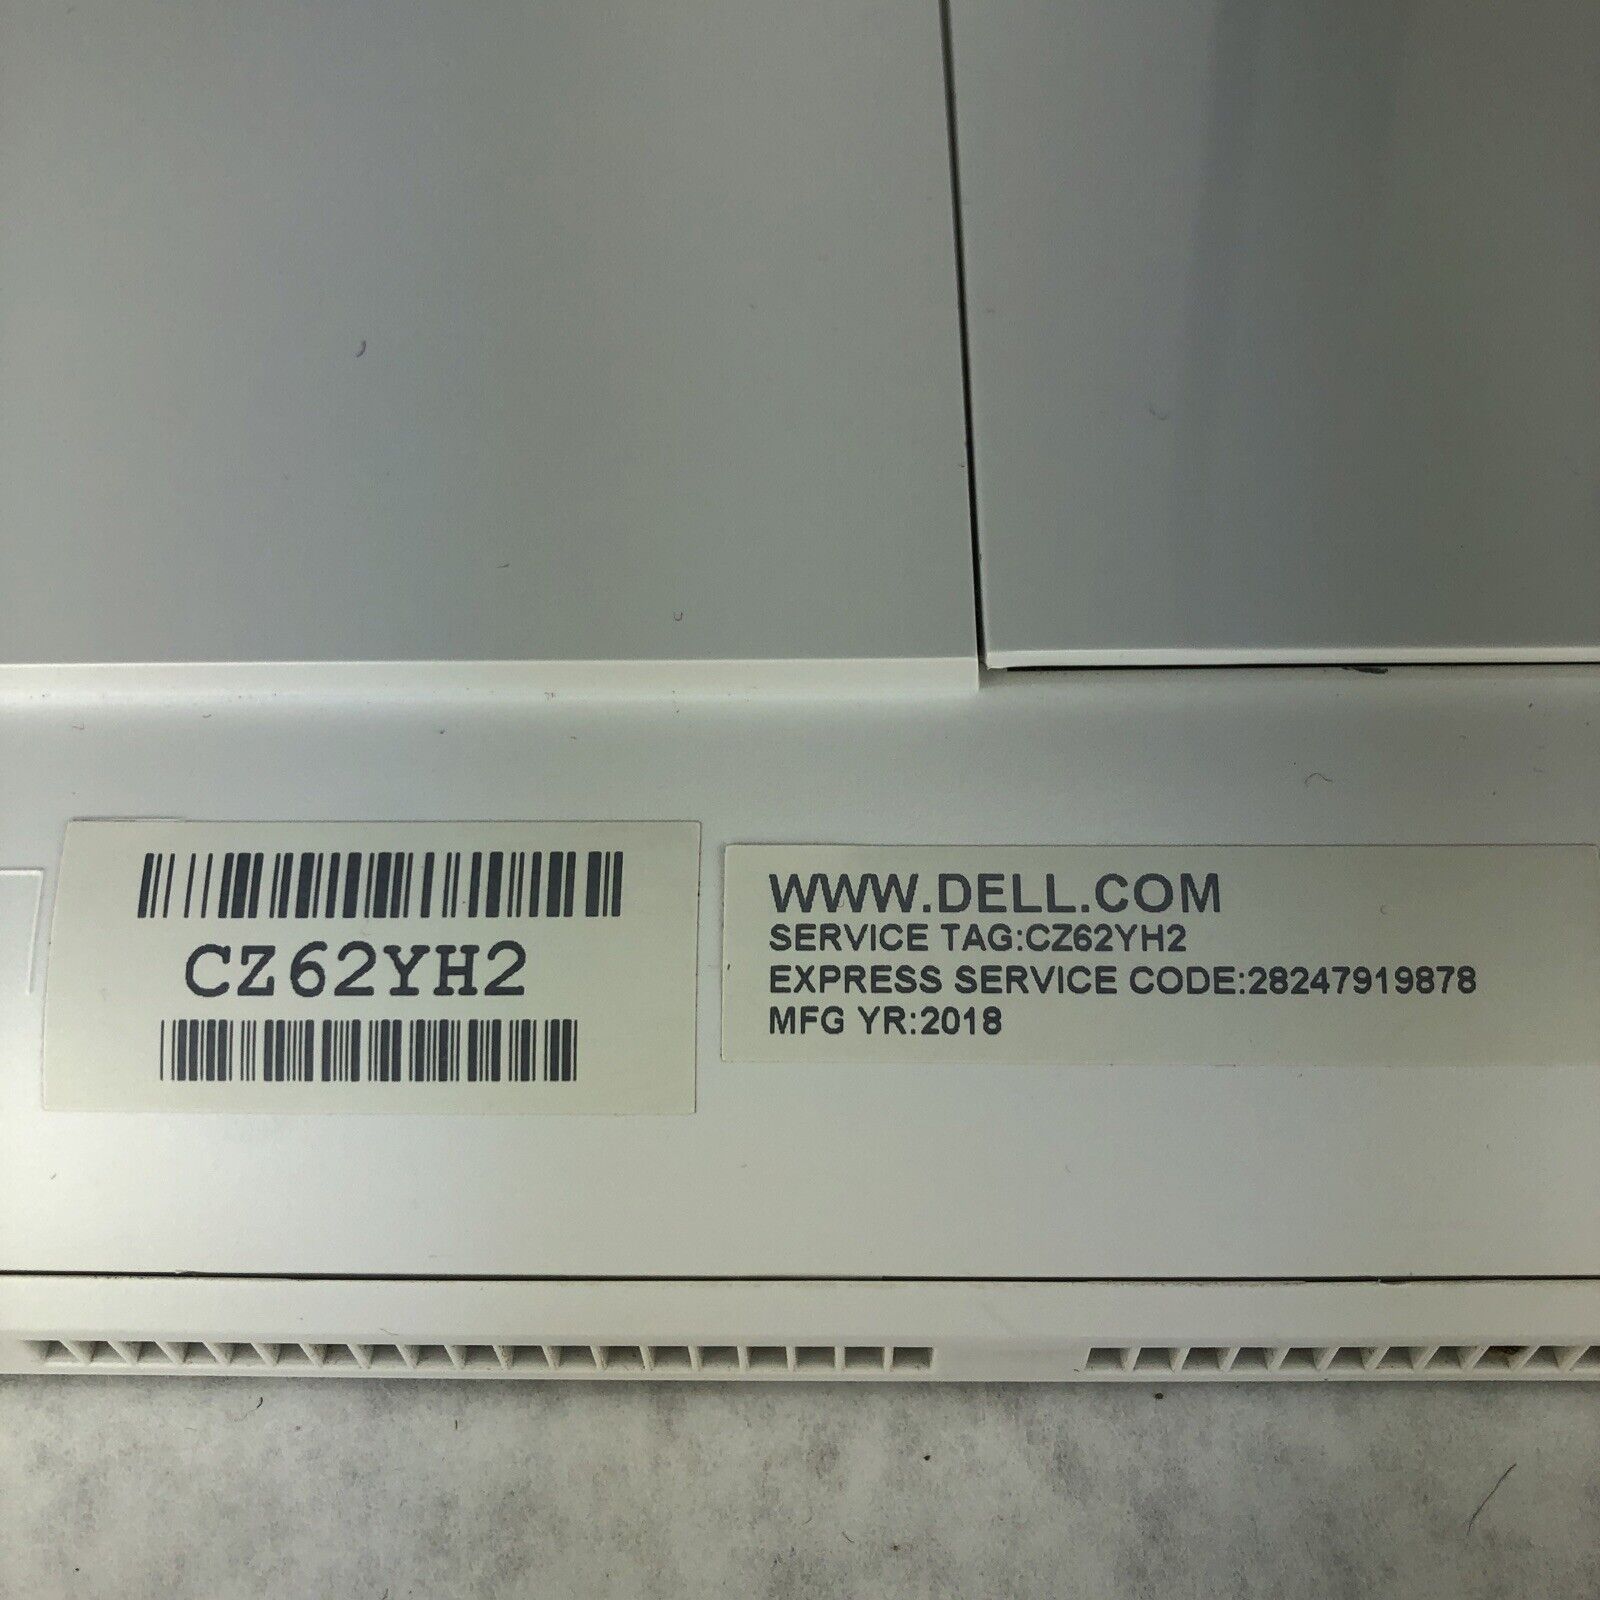 Dell Inspiron 22-3265 AIO AMD A6-7310 2.00GHz 6GB RAM Wi-Fi No AC Adapter No HDD